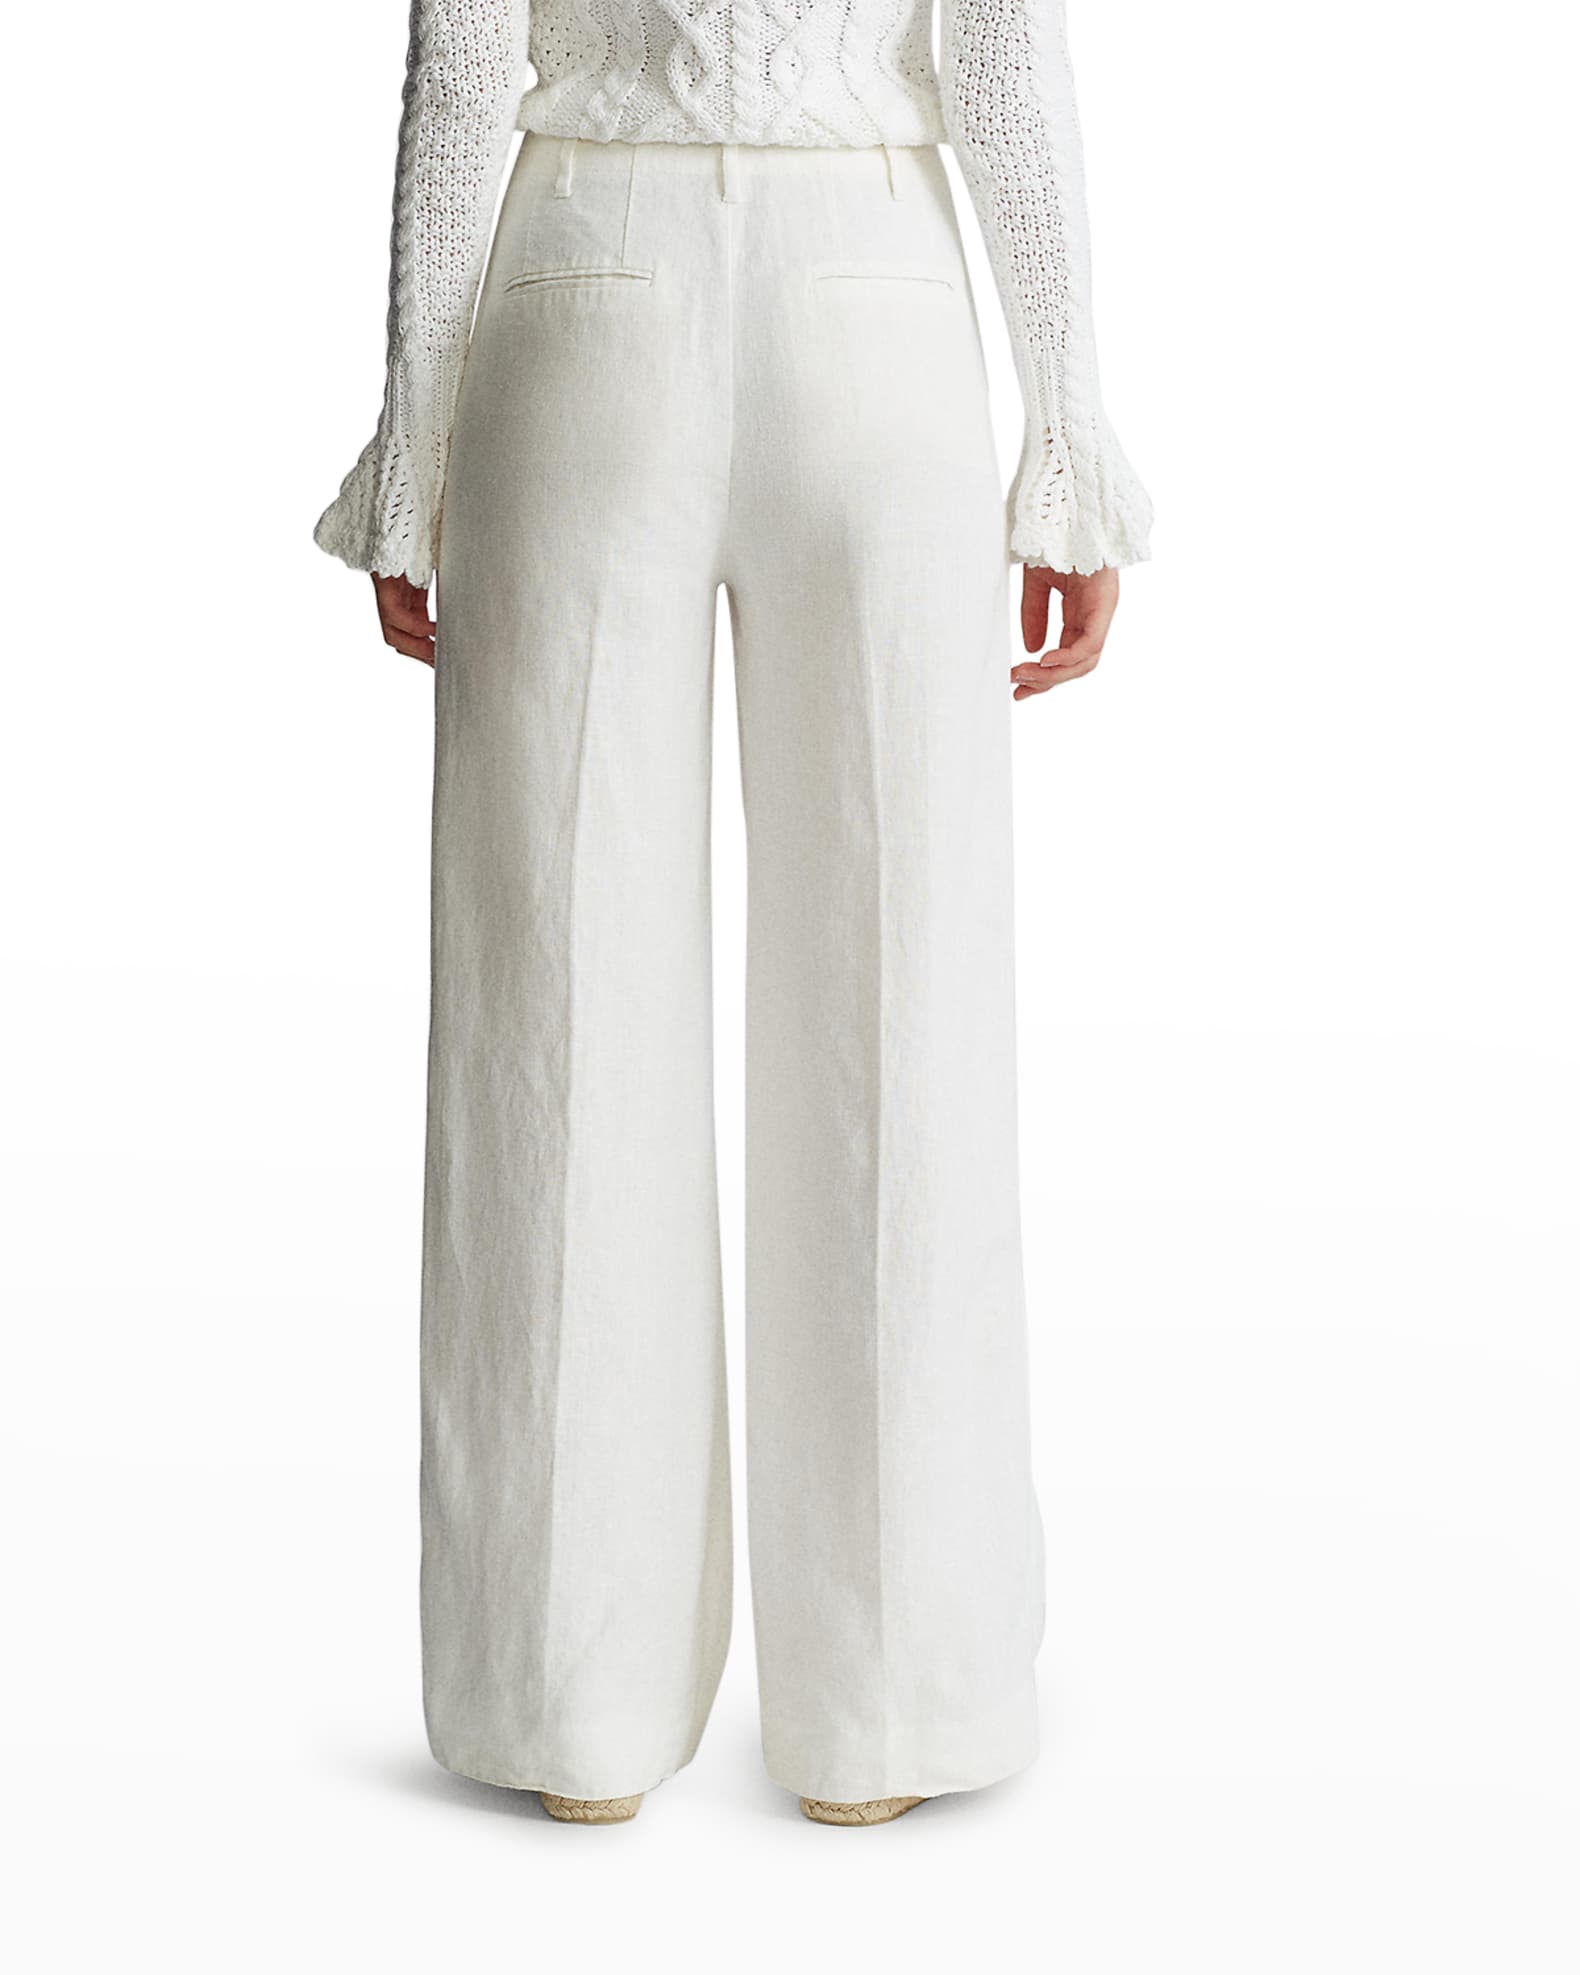 Polo Ralph Lauren Straight-Leg Pants | Neiman Marcus